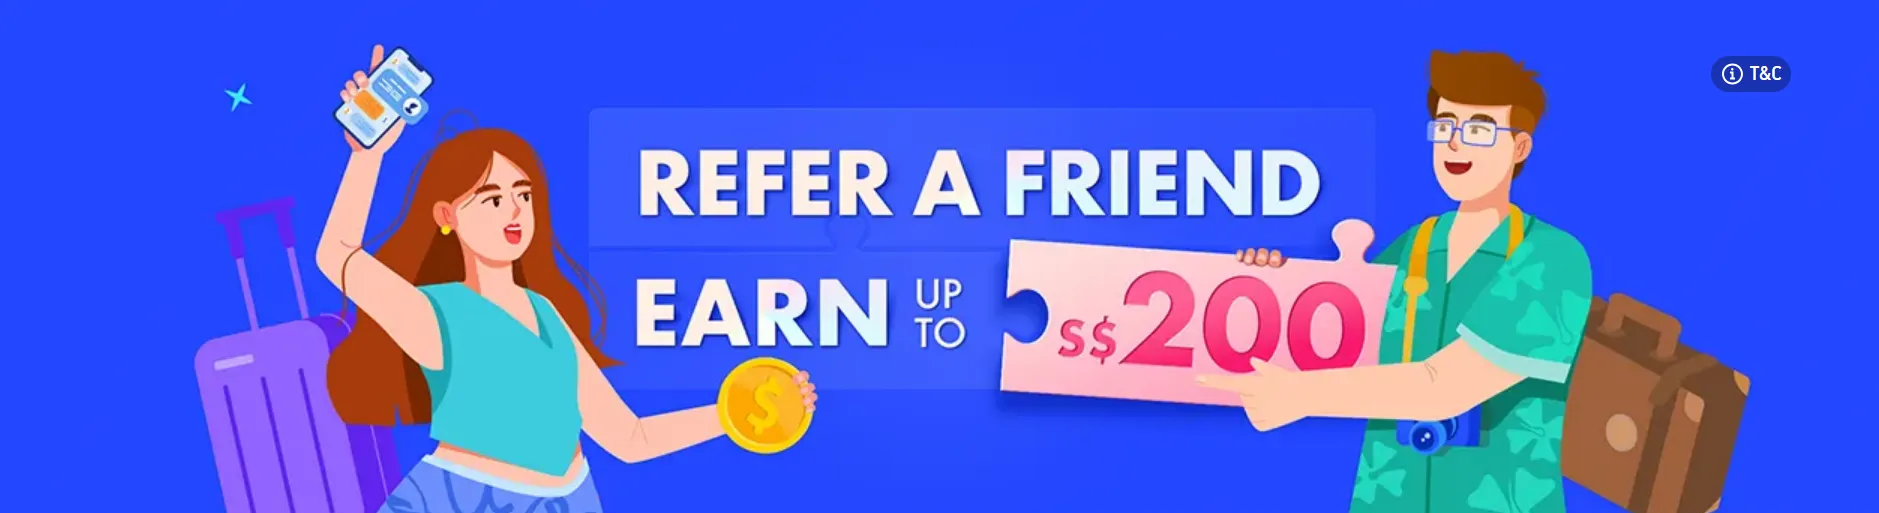 Trip.com Promo Code Singapore: Refer a Friend and Earn